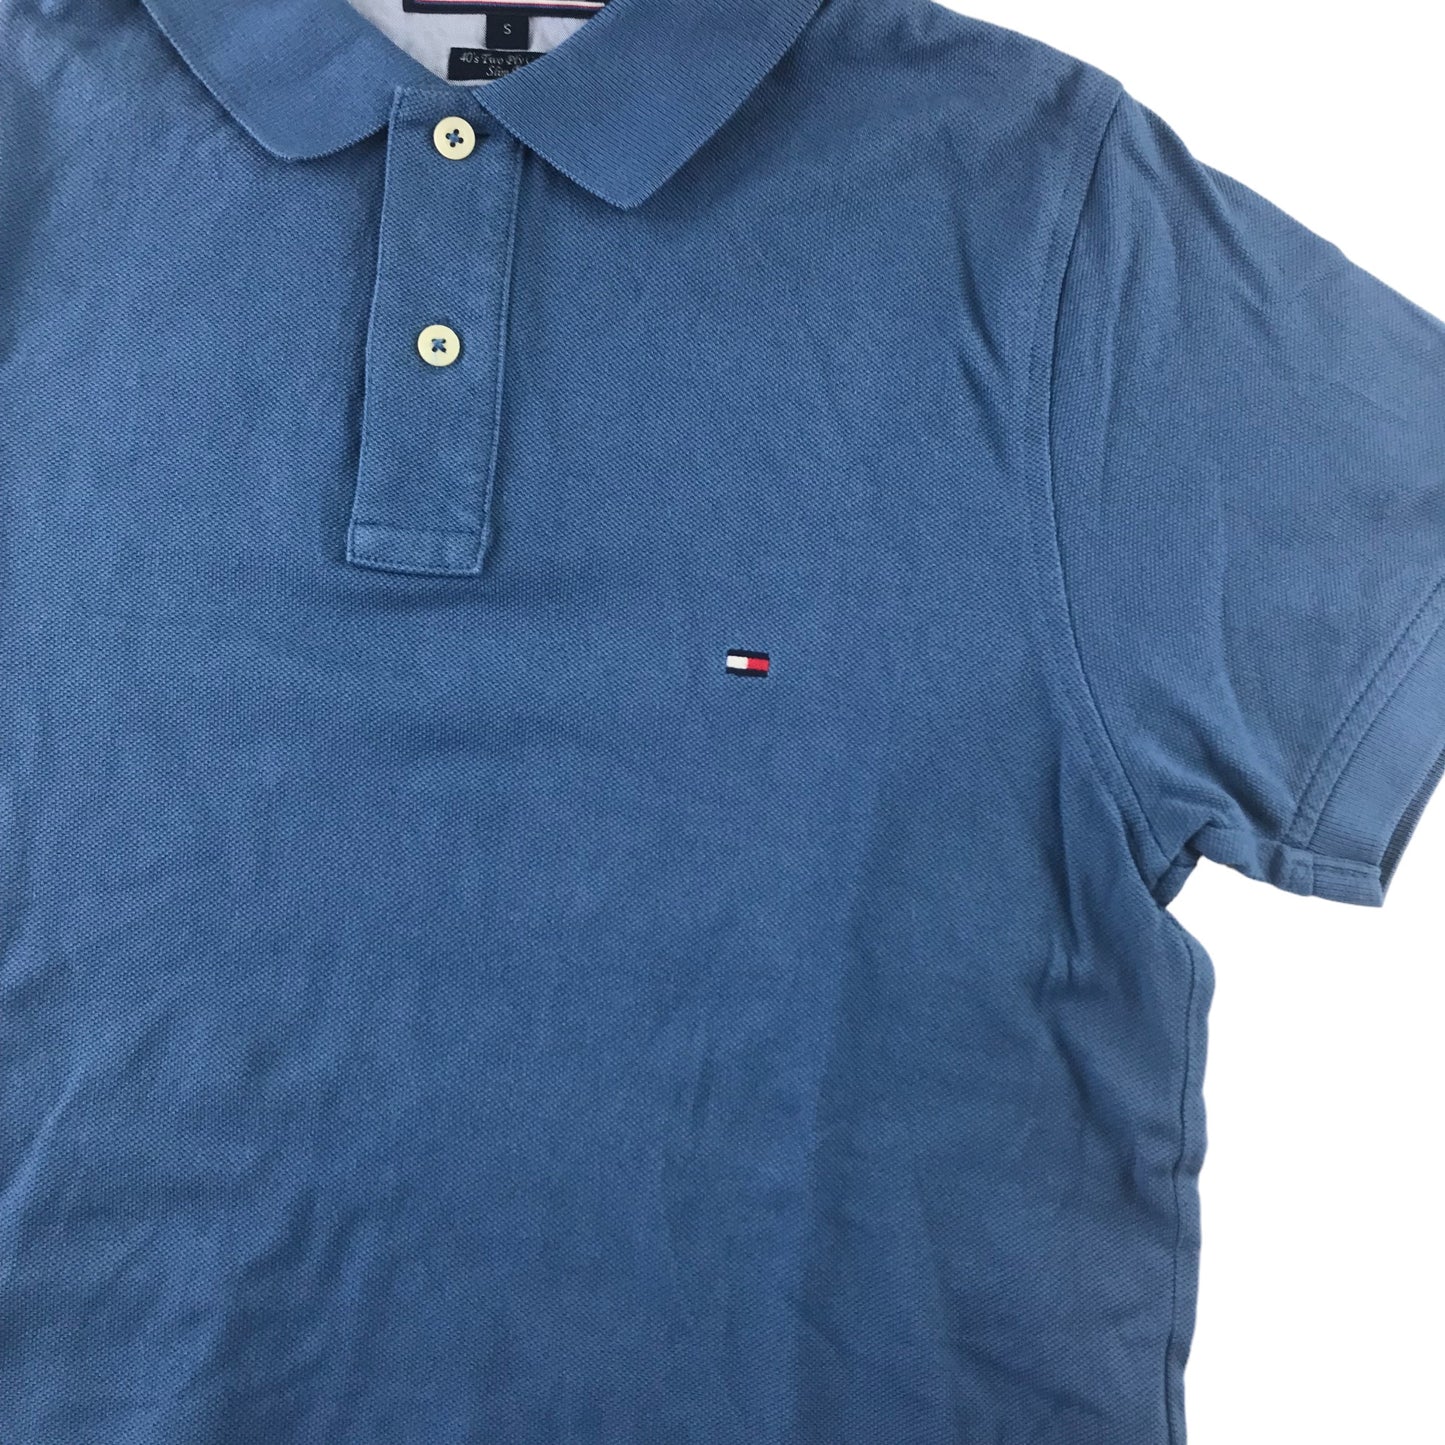 Tommy Hilfiger Polo Shirt Size Small Blue Short Sleeve Plain Slim Fit Cotton